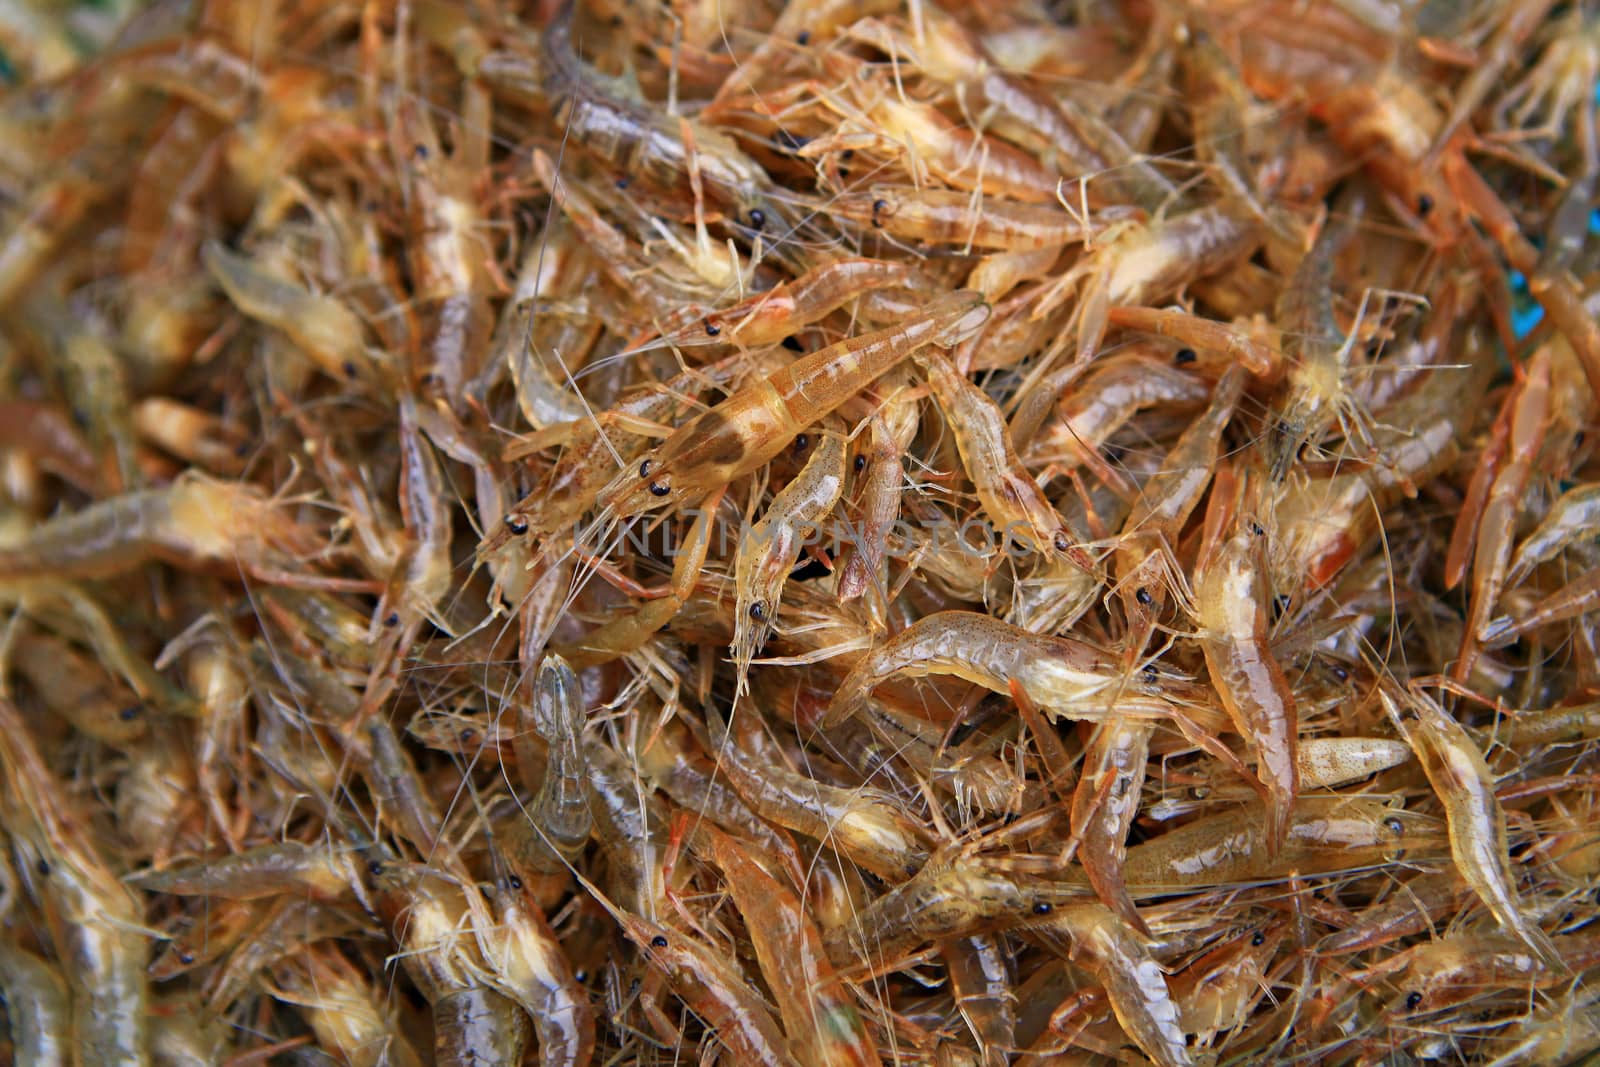 Fresh small river shrimps in Thailand market